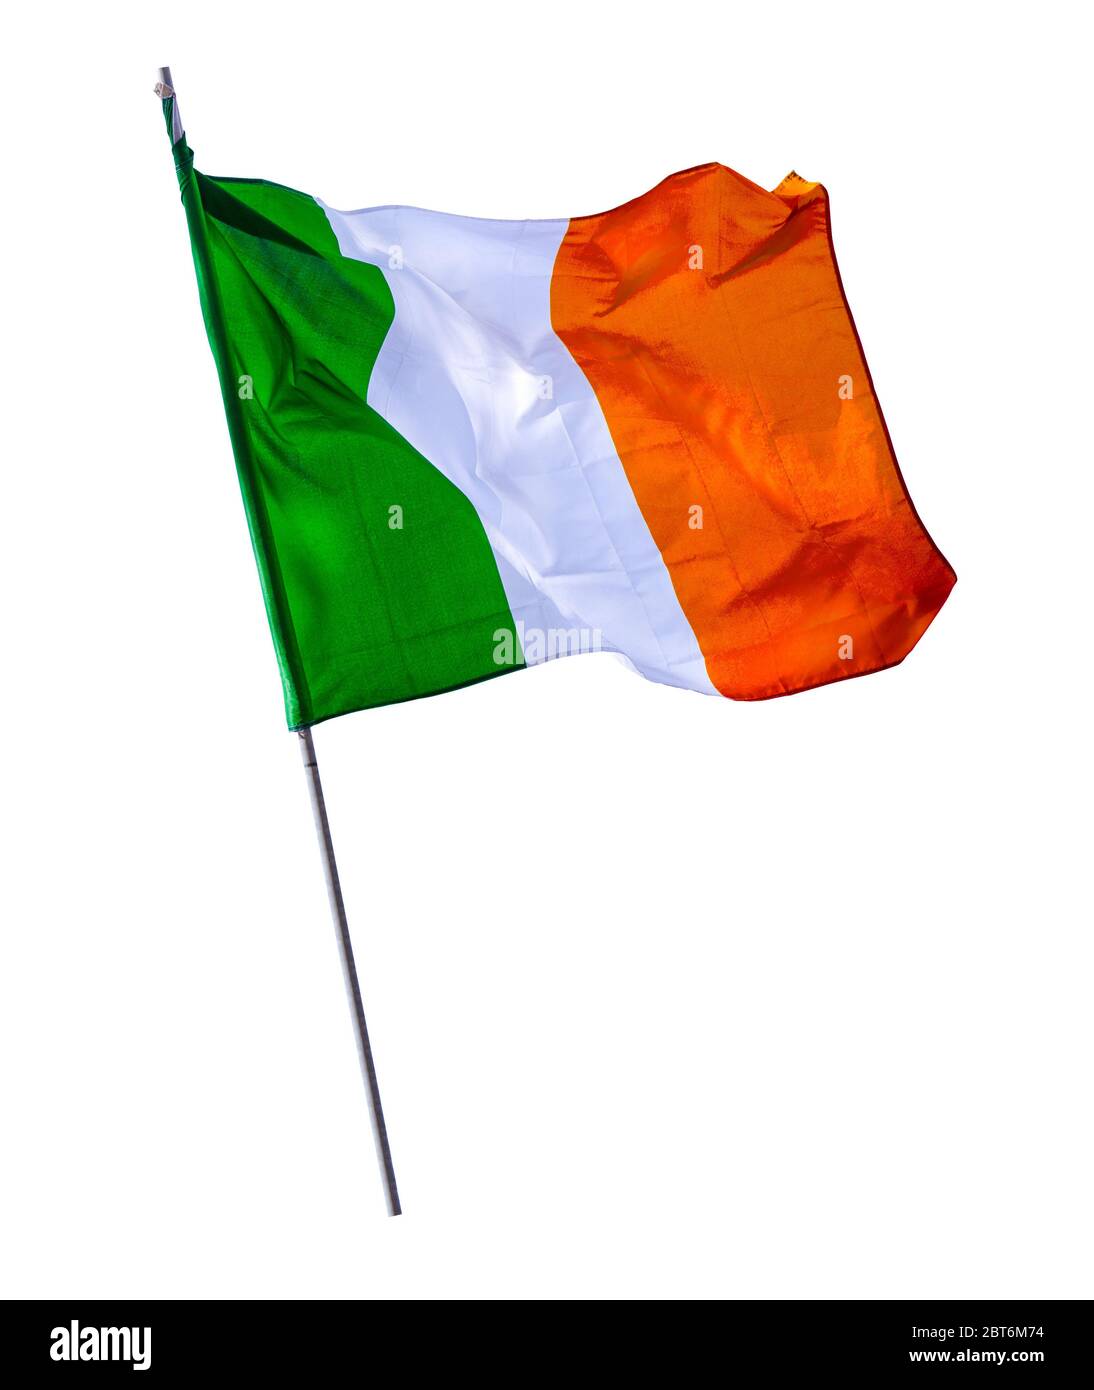 IRLANDE IRISH Republic osteraufstand 1916 Hissflagge drapeaux drapeaux 60x90cm 